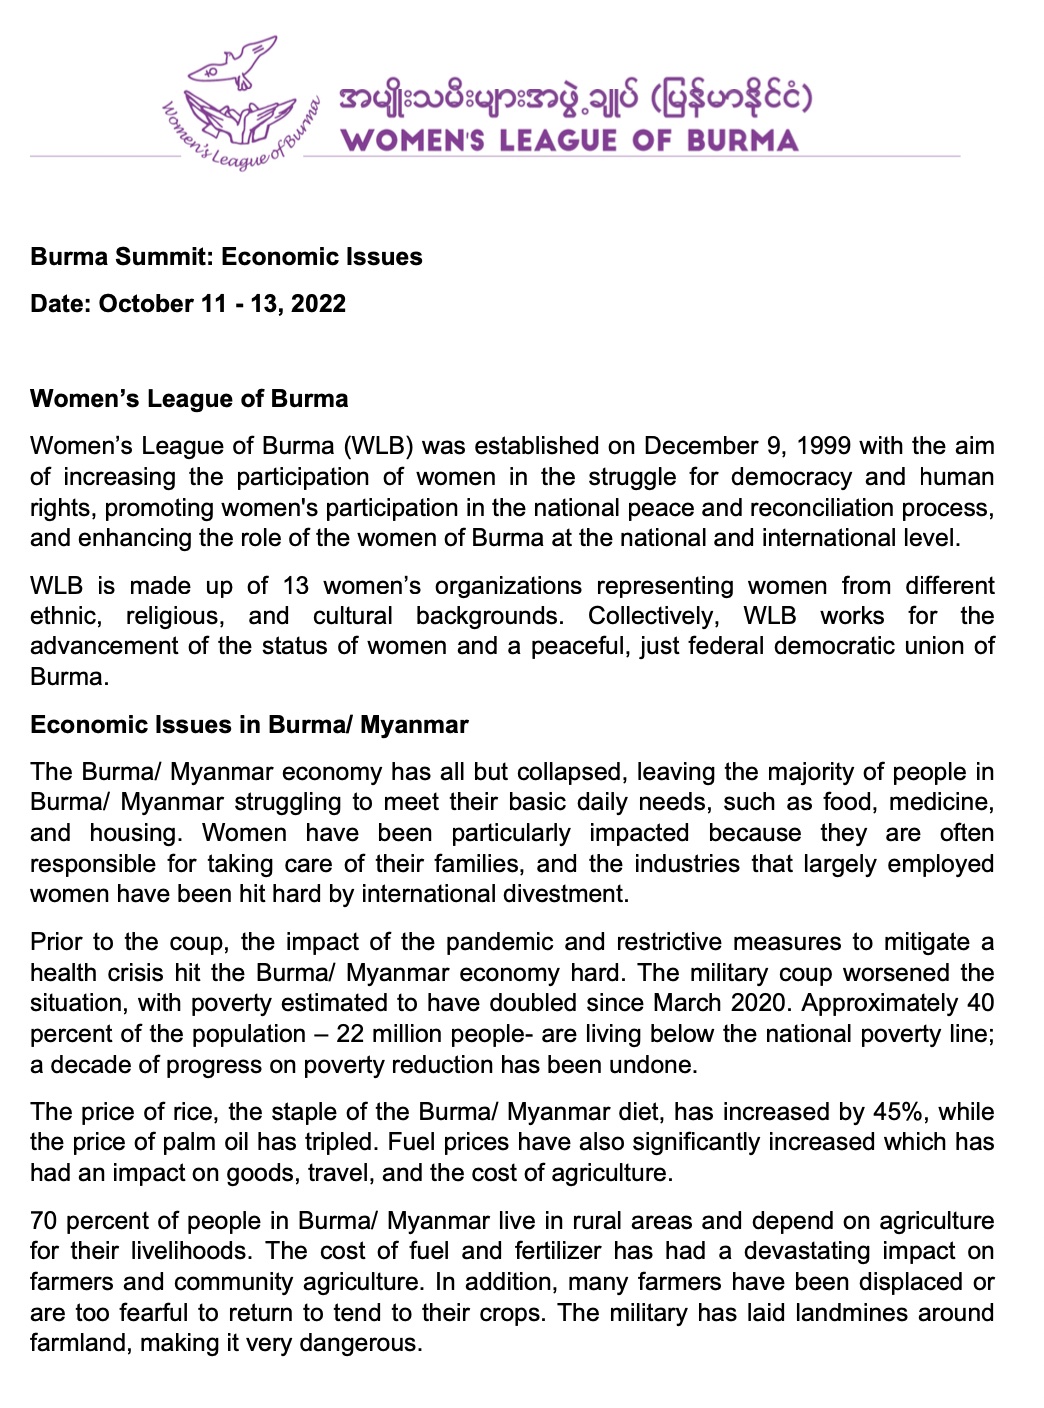 Women's League of Burma's Statements to Burma Summit